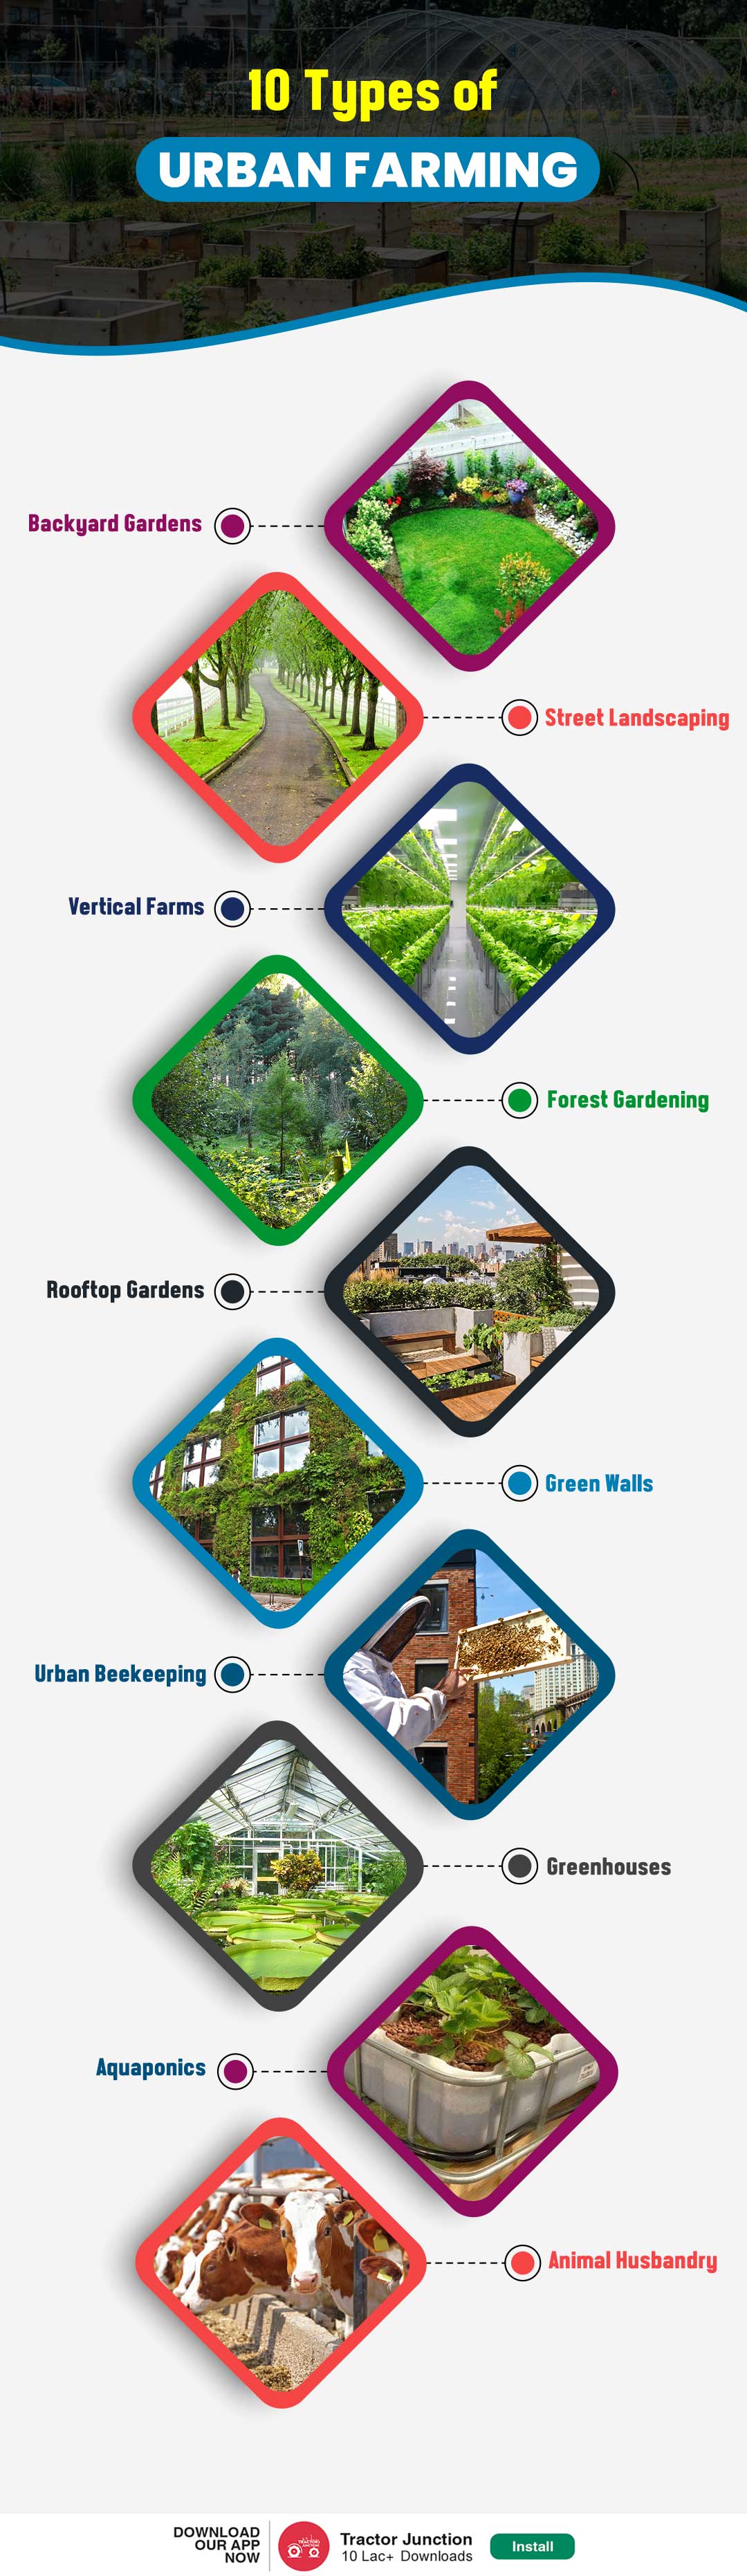 10 Types of Urban Farming